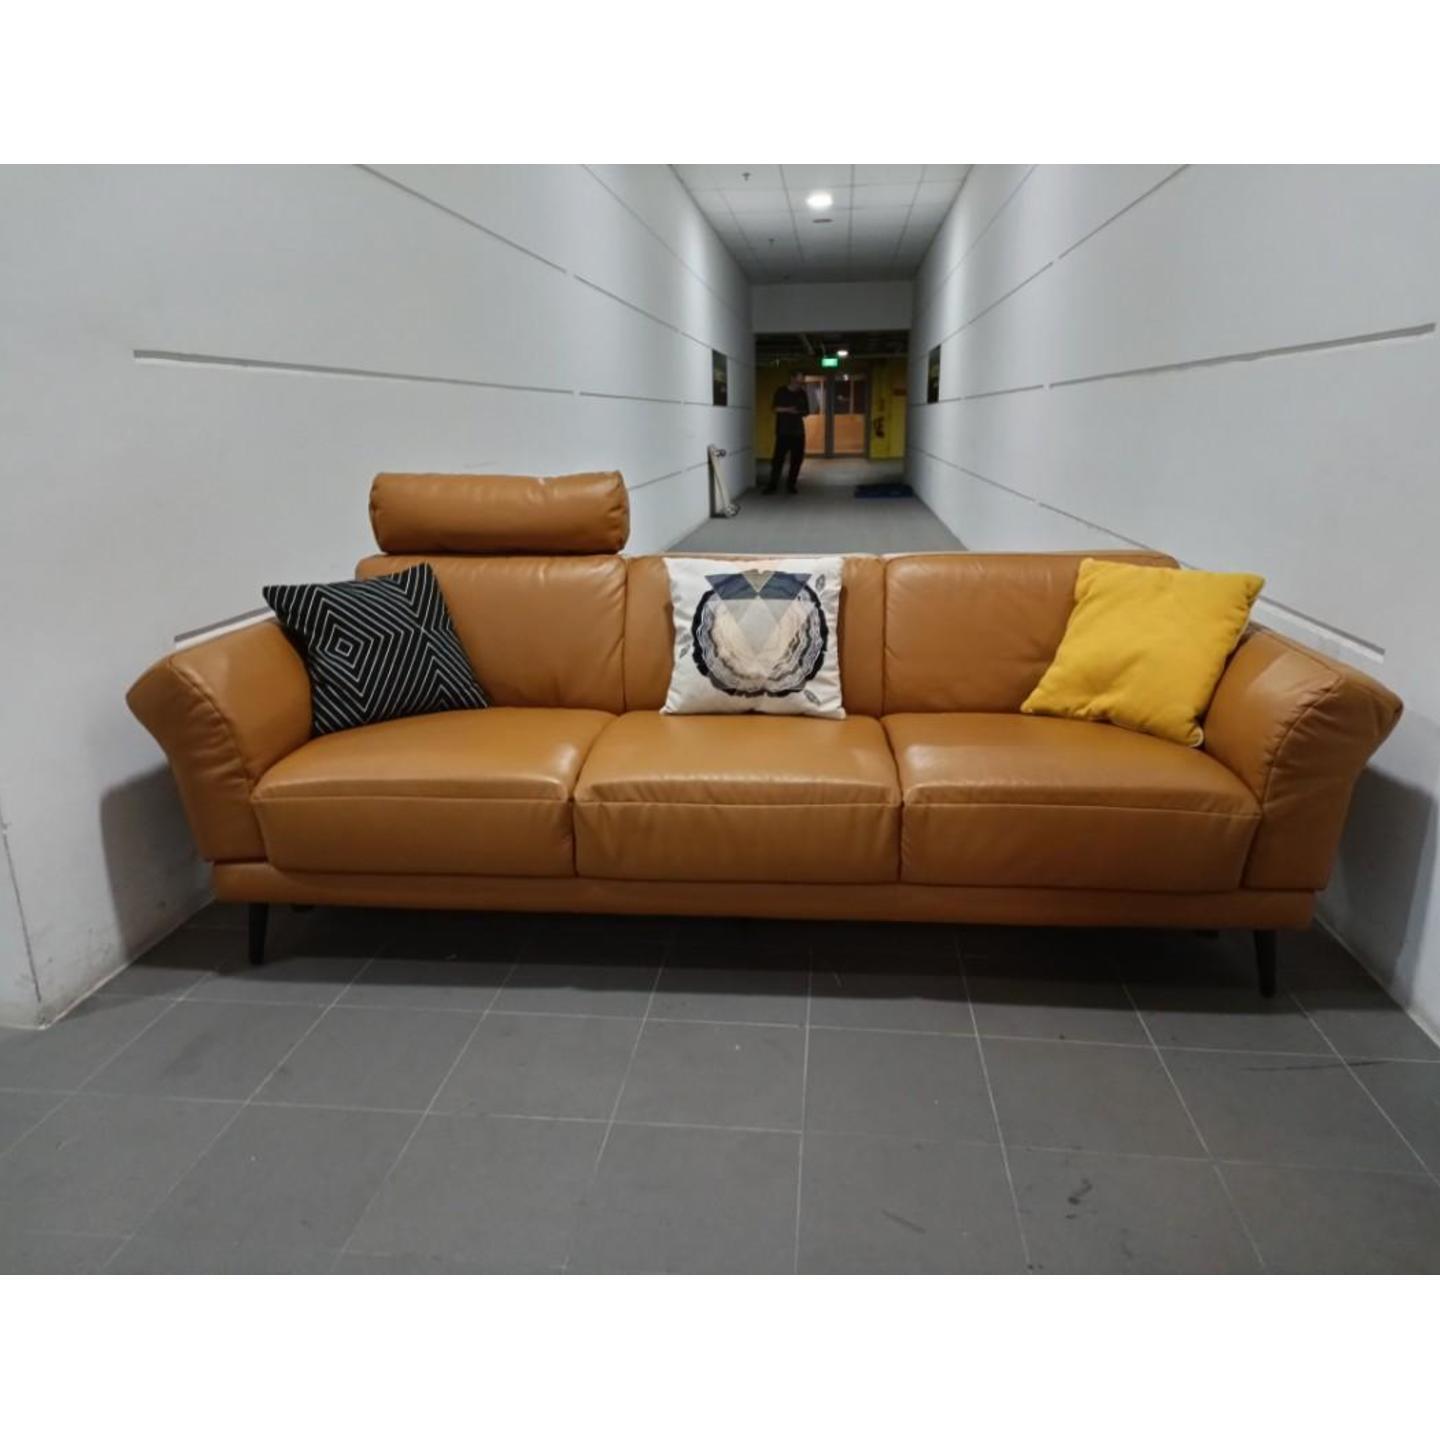 RAIKKONEN Genuine Leather 3 Seater Sofa in CARAMEL BROWN